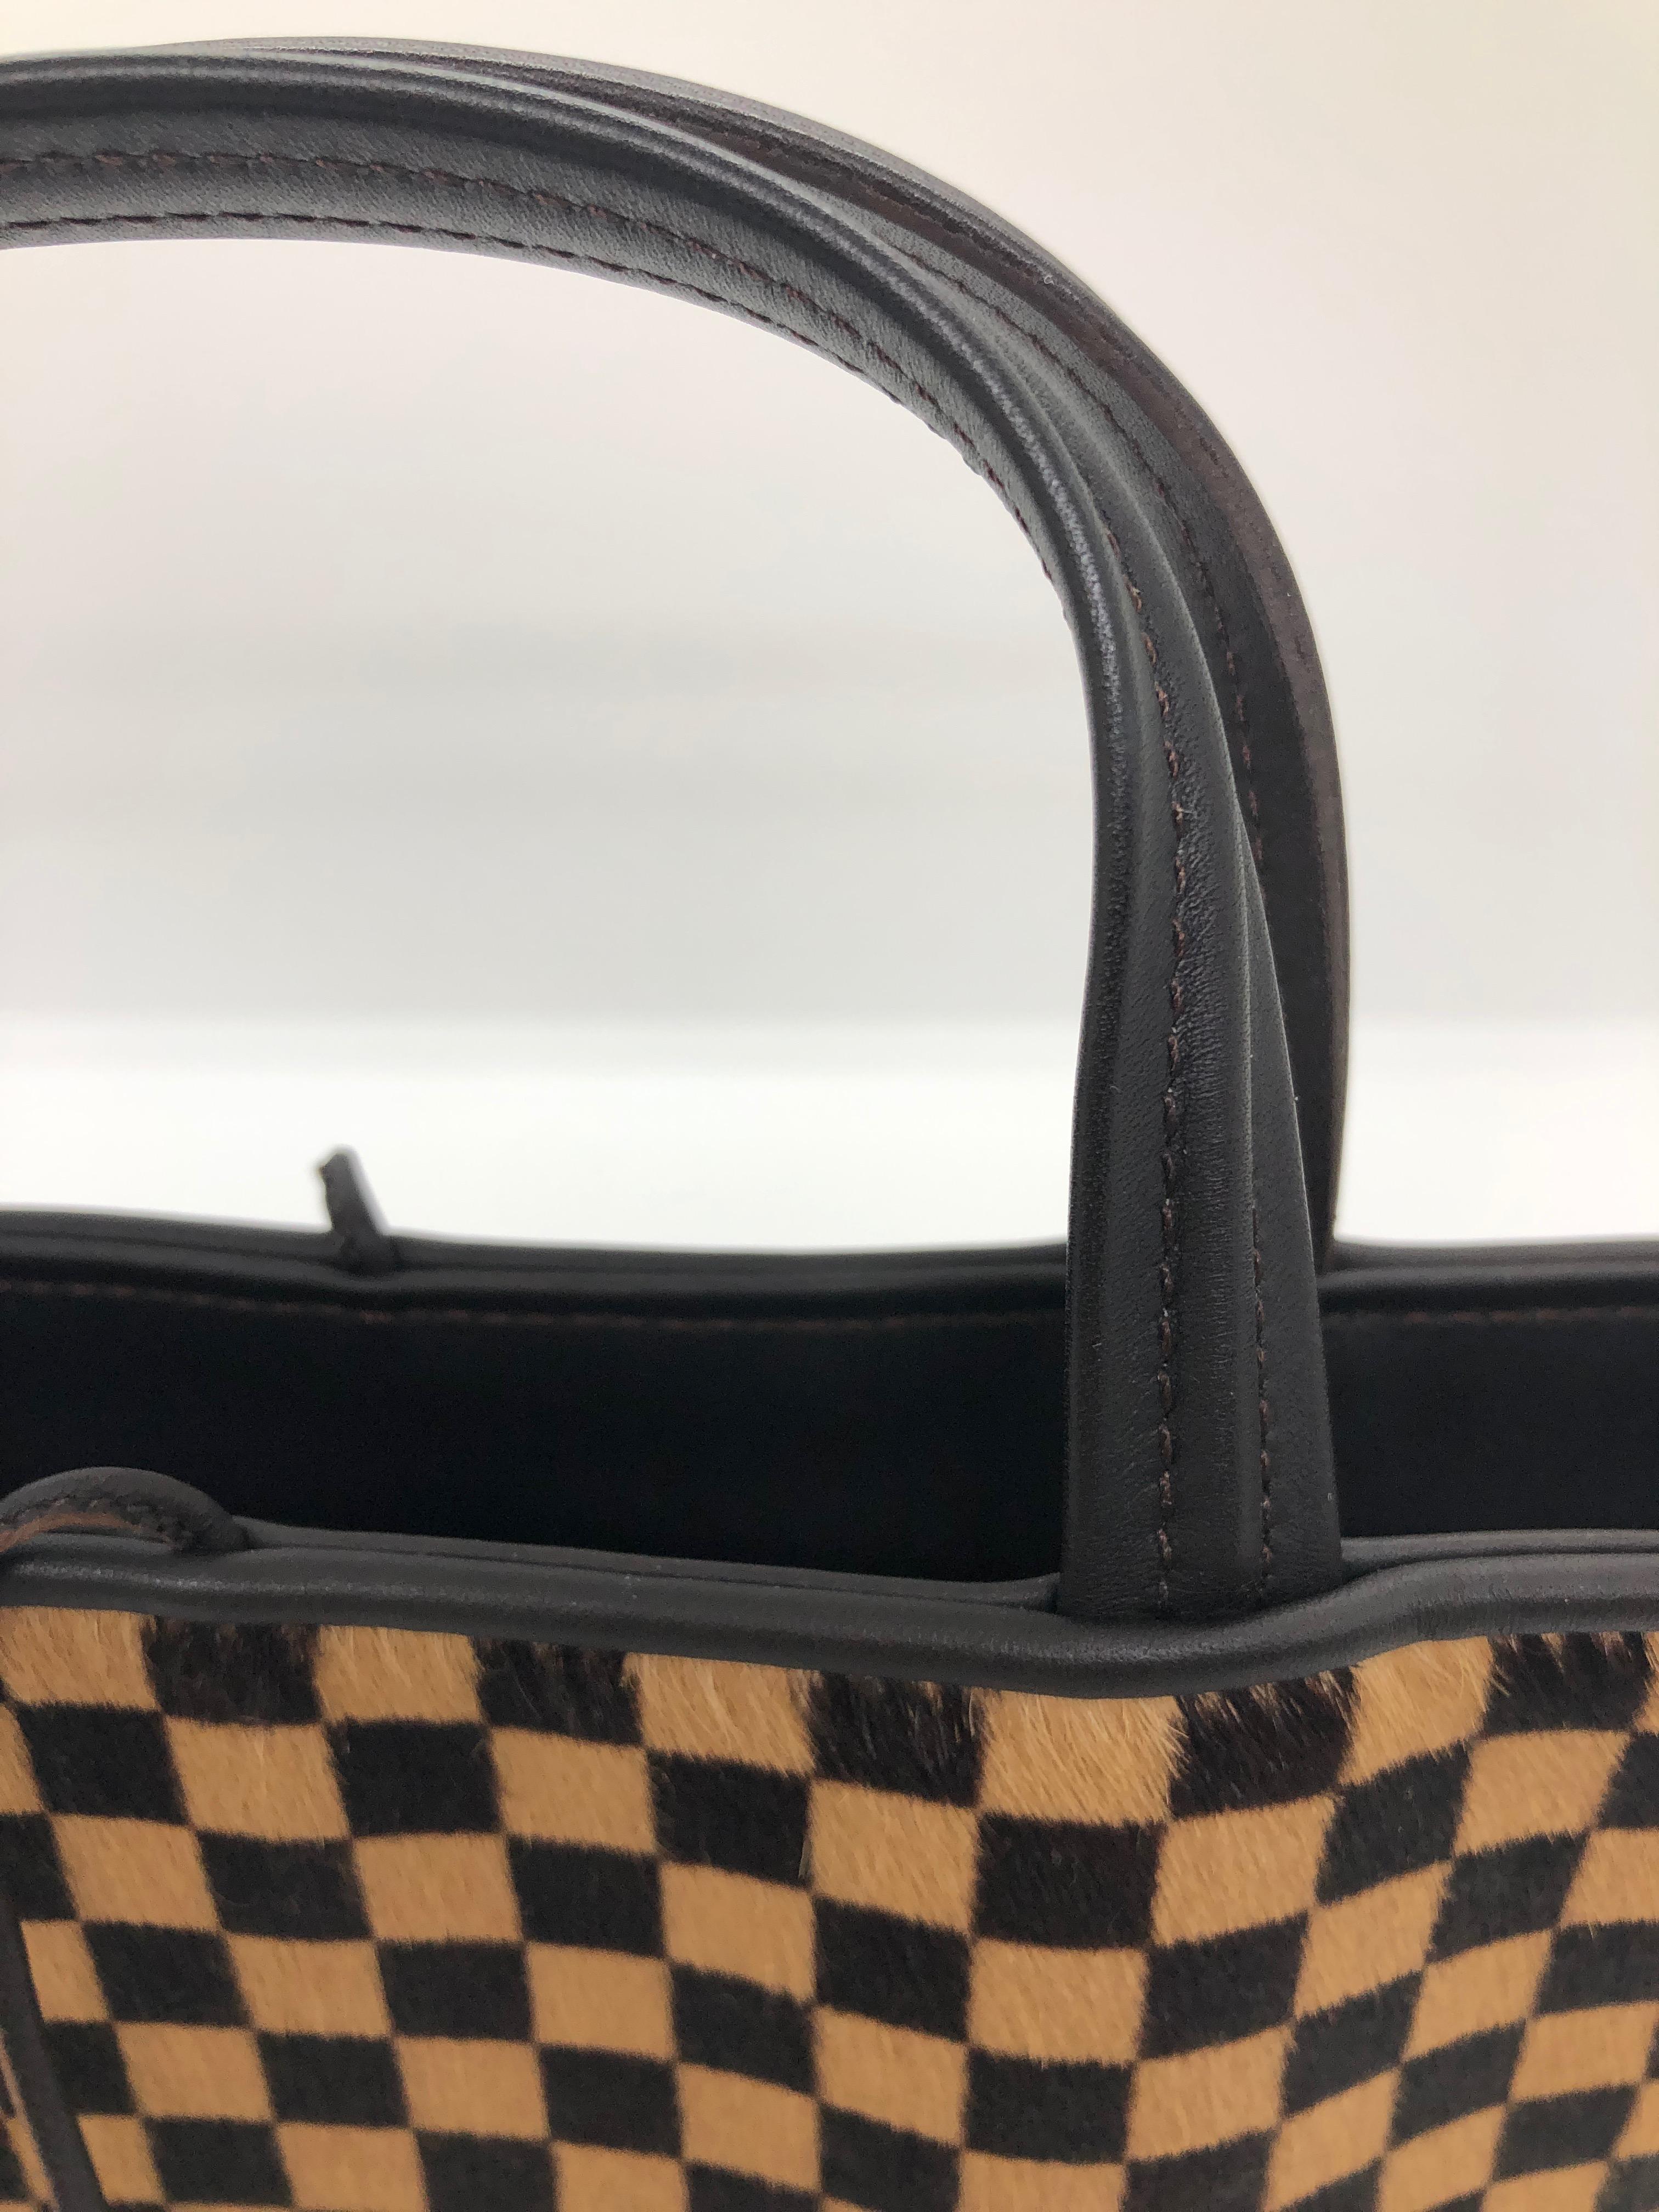 Louis Vuitton Damier Sauvage Impala Tote Handbag of Brown & Tan Pony Hair   5